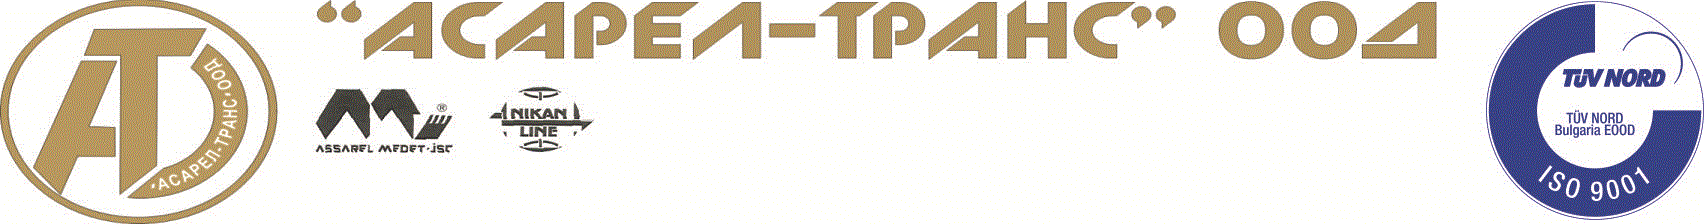 Лого на АСАРЕЛ - ТРАНС ООД